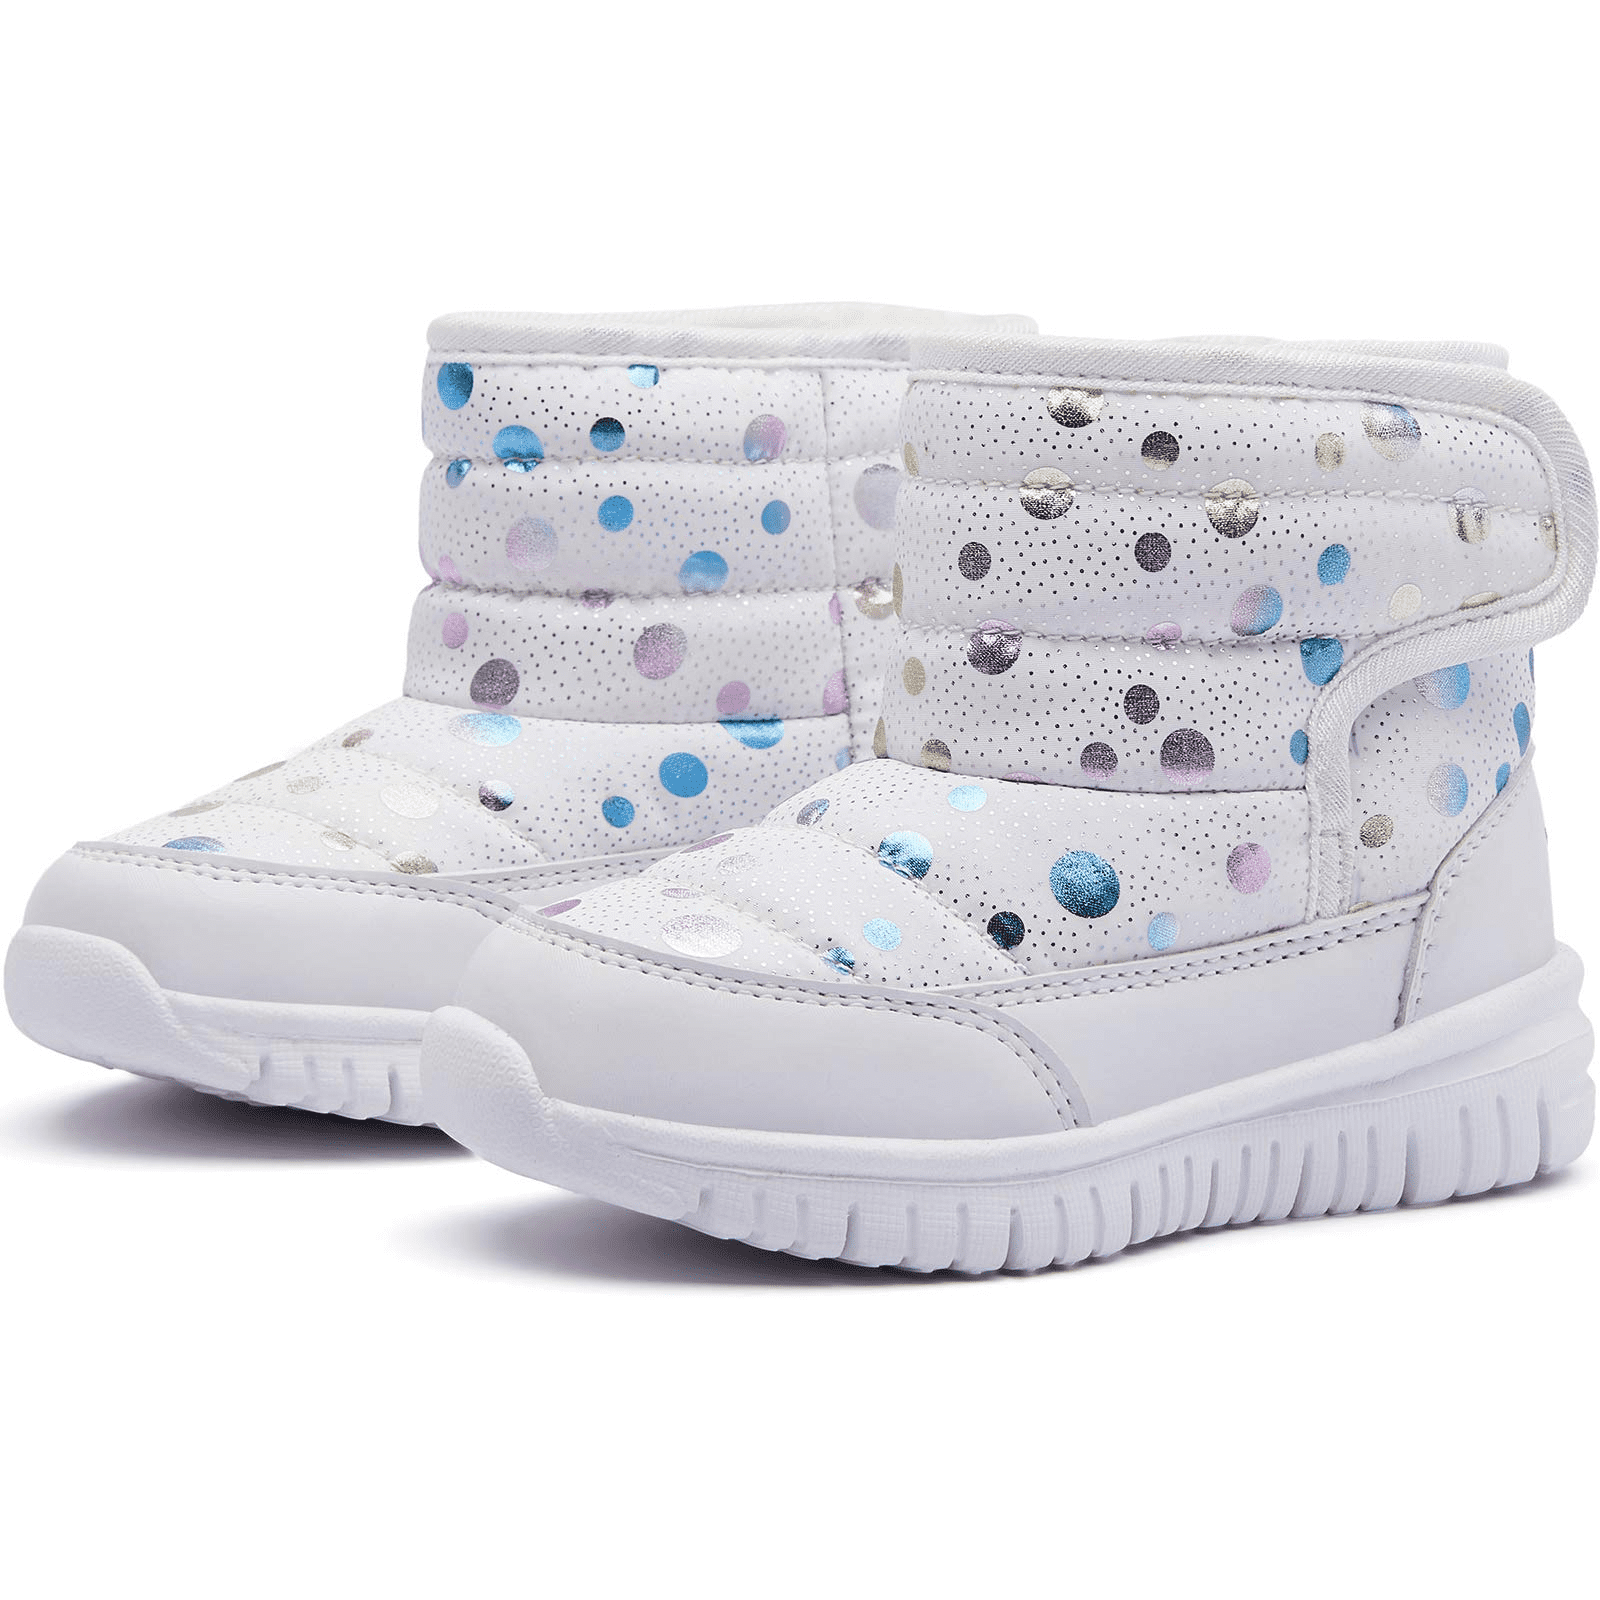 Toddler/Little Kid HOBIBEAR Toddler Snow Boots for Boys Girls Kids Outdoor Winter Shoes  